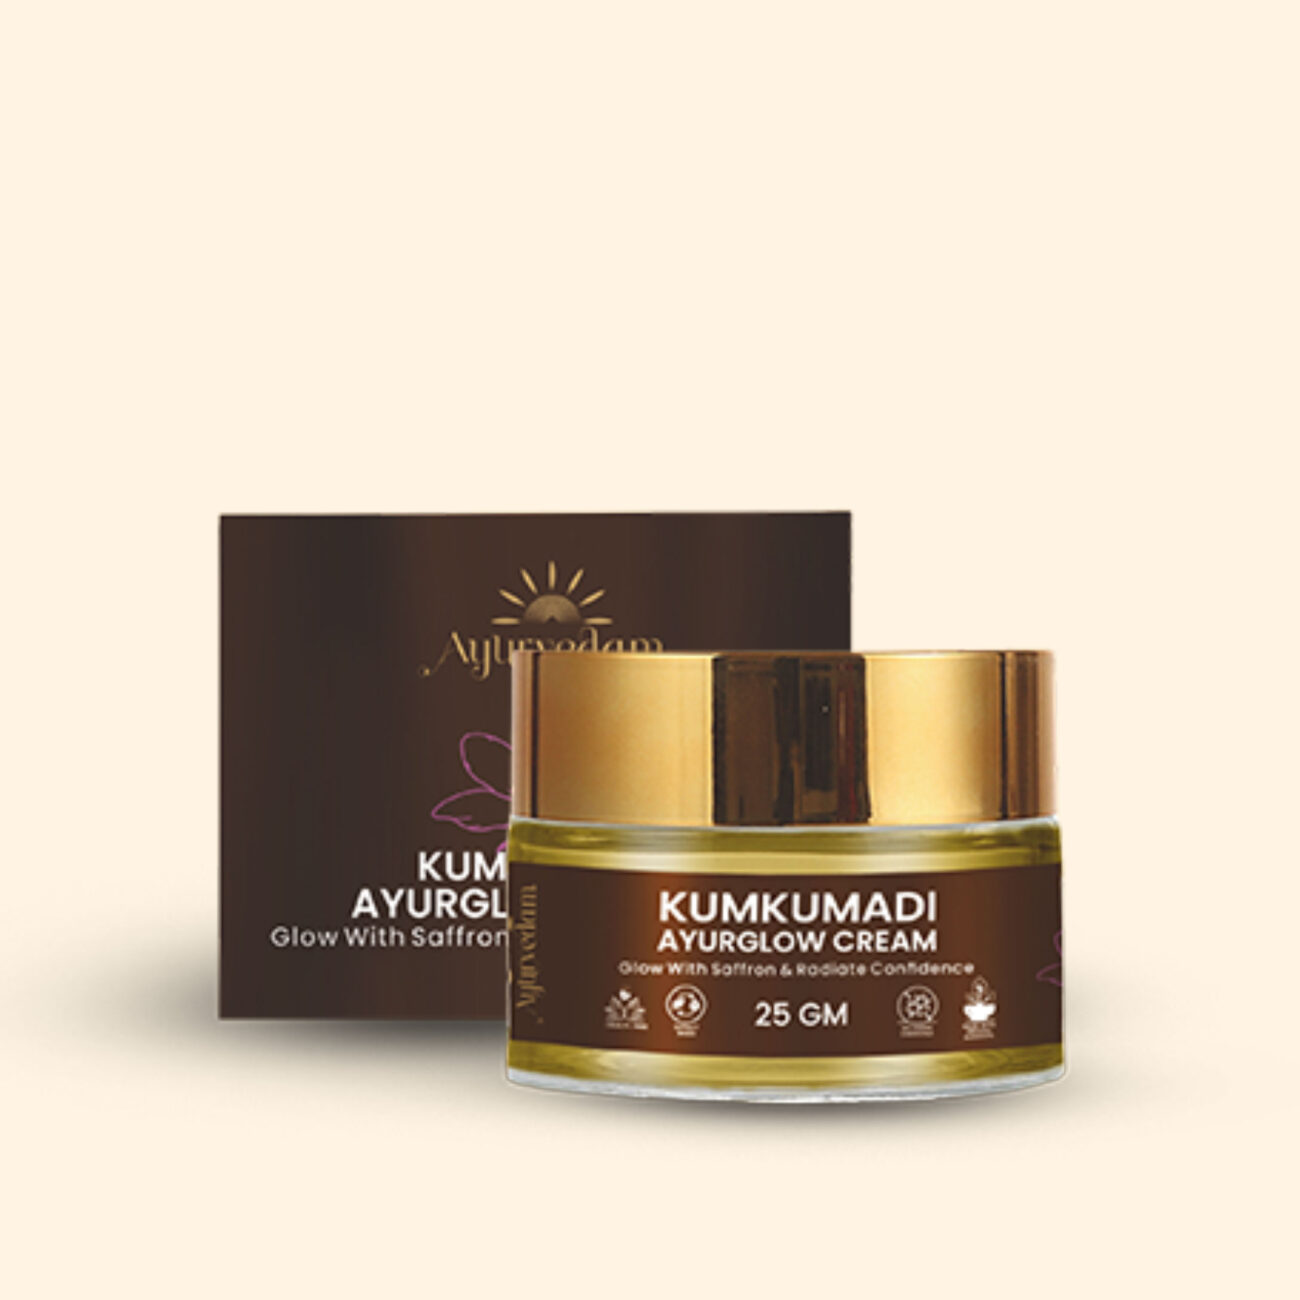 A jar of Kumkumadi Ayurglow Cream by Ayurvedam